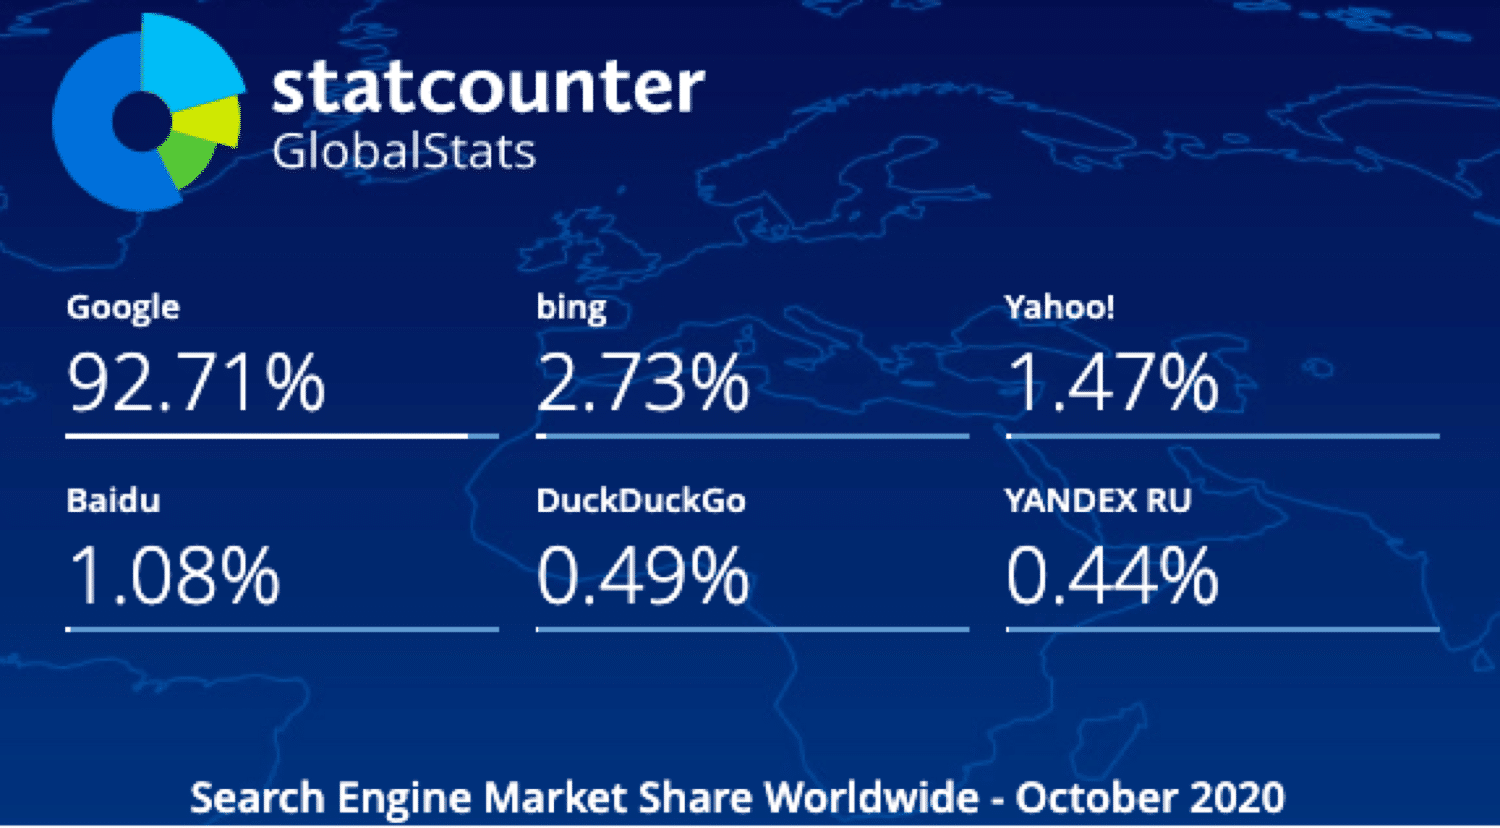 Search Engine Market Share statistics